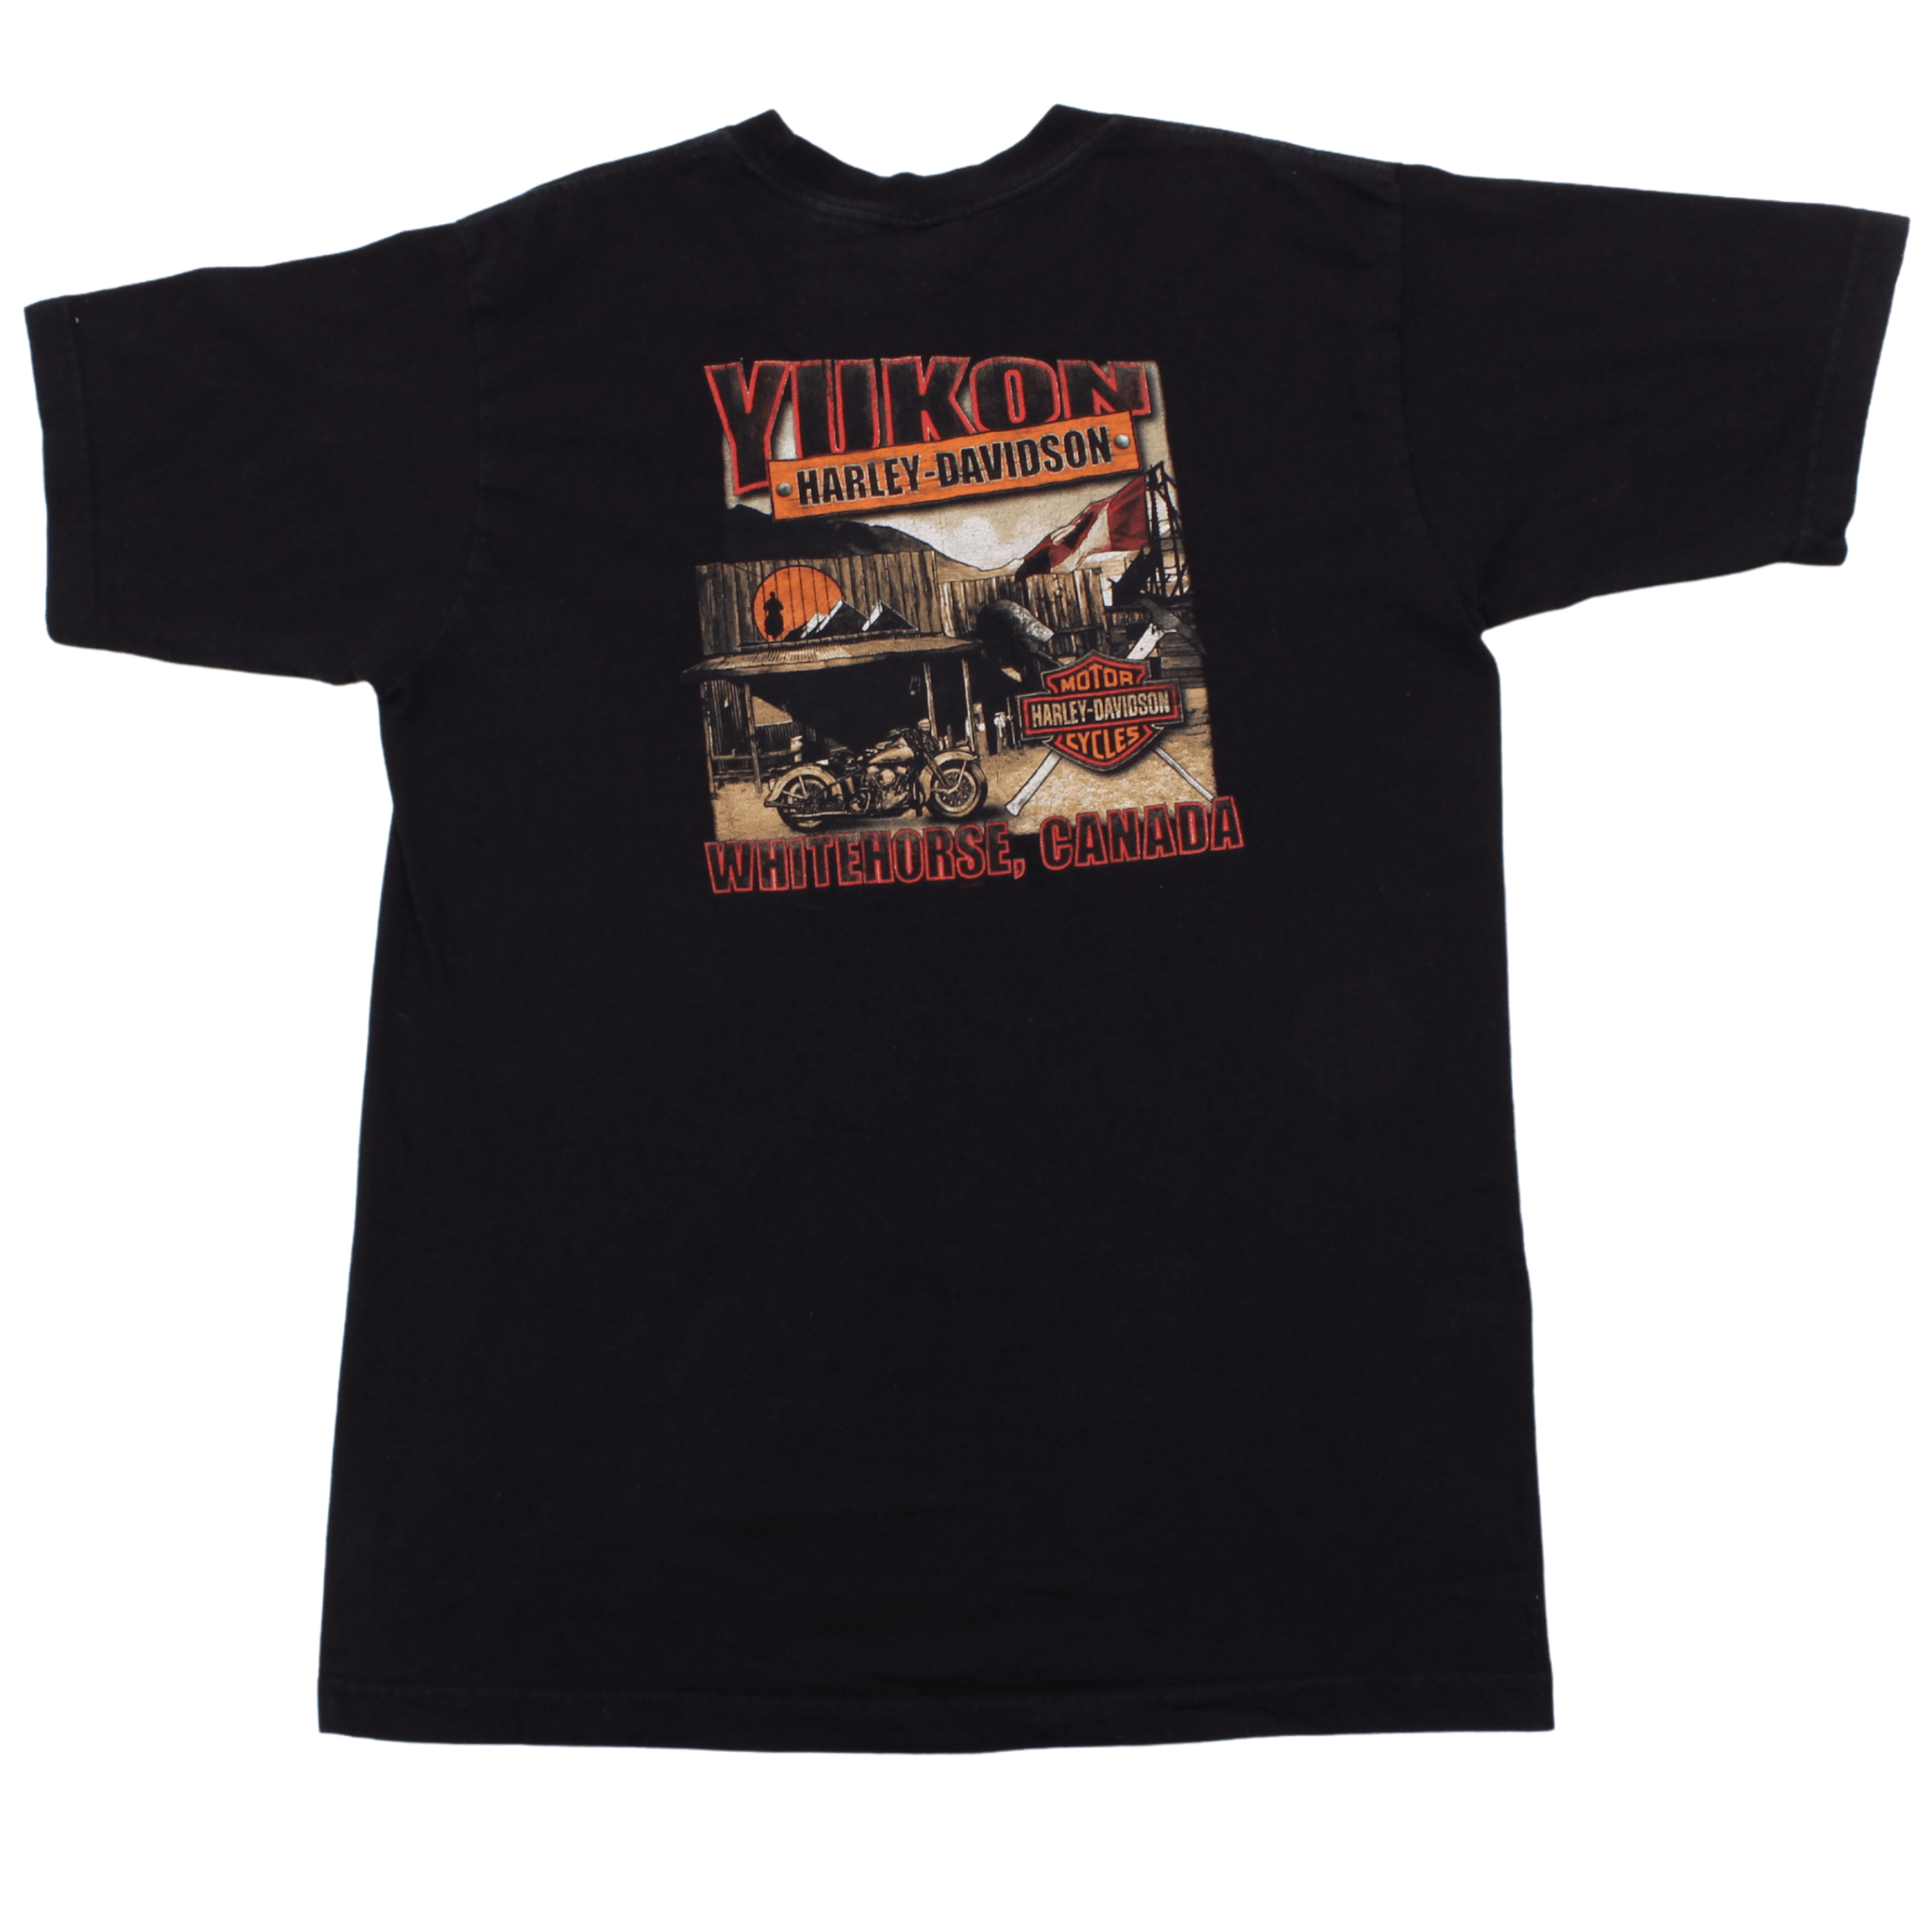 Vintage Harley Davidson T Shirt (M)